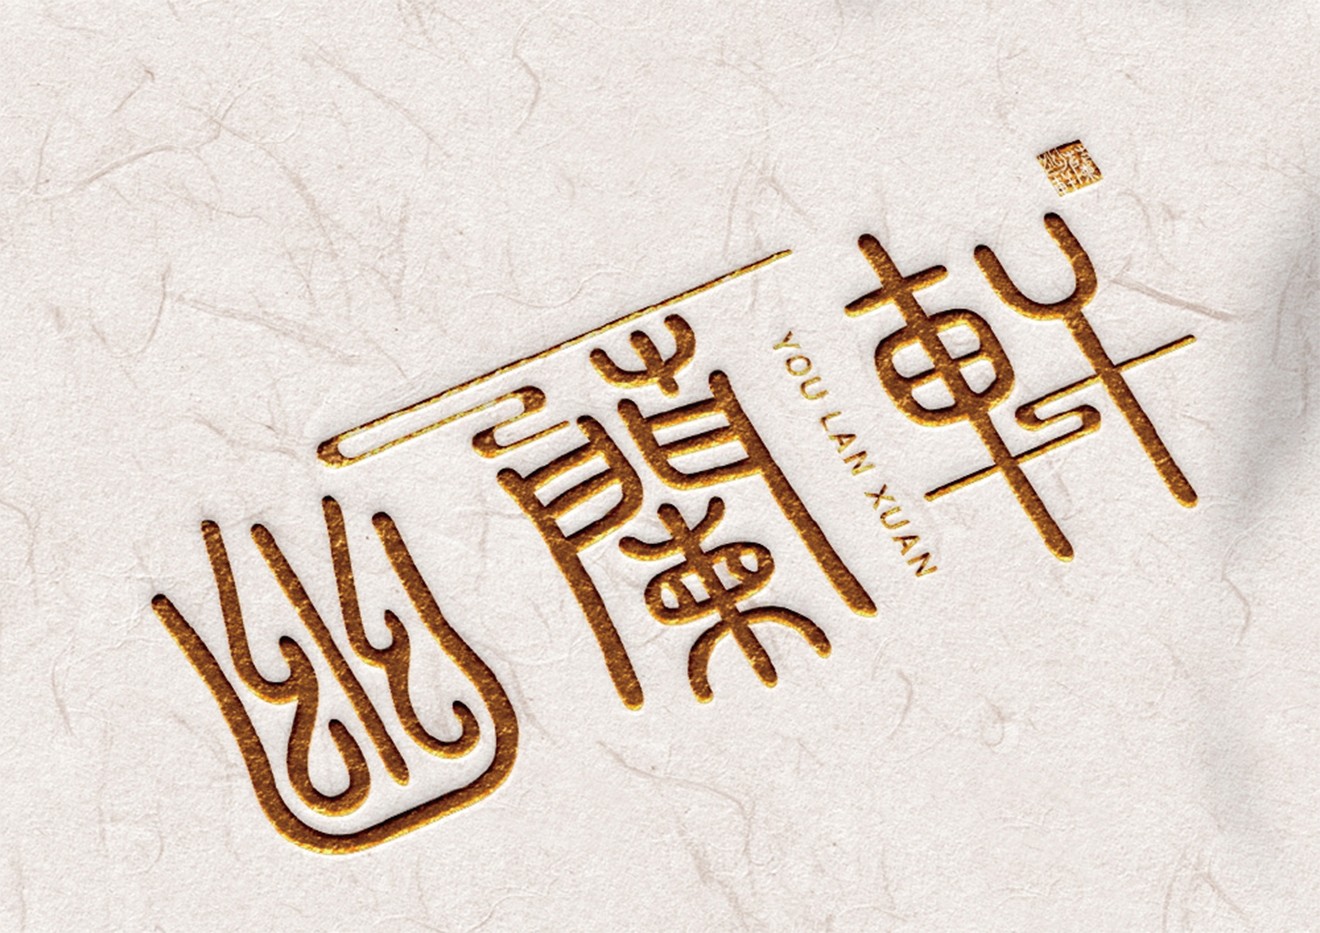 幽兰轩logo设计